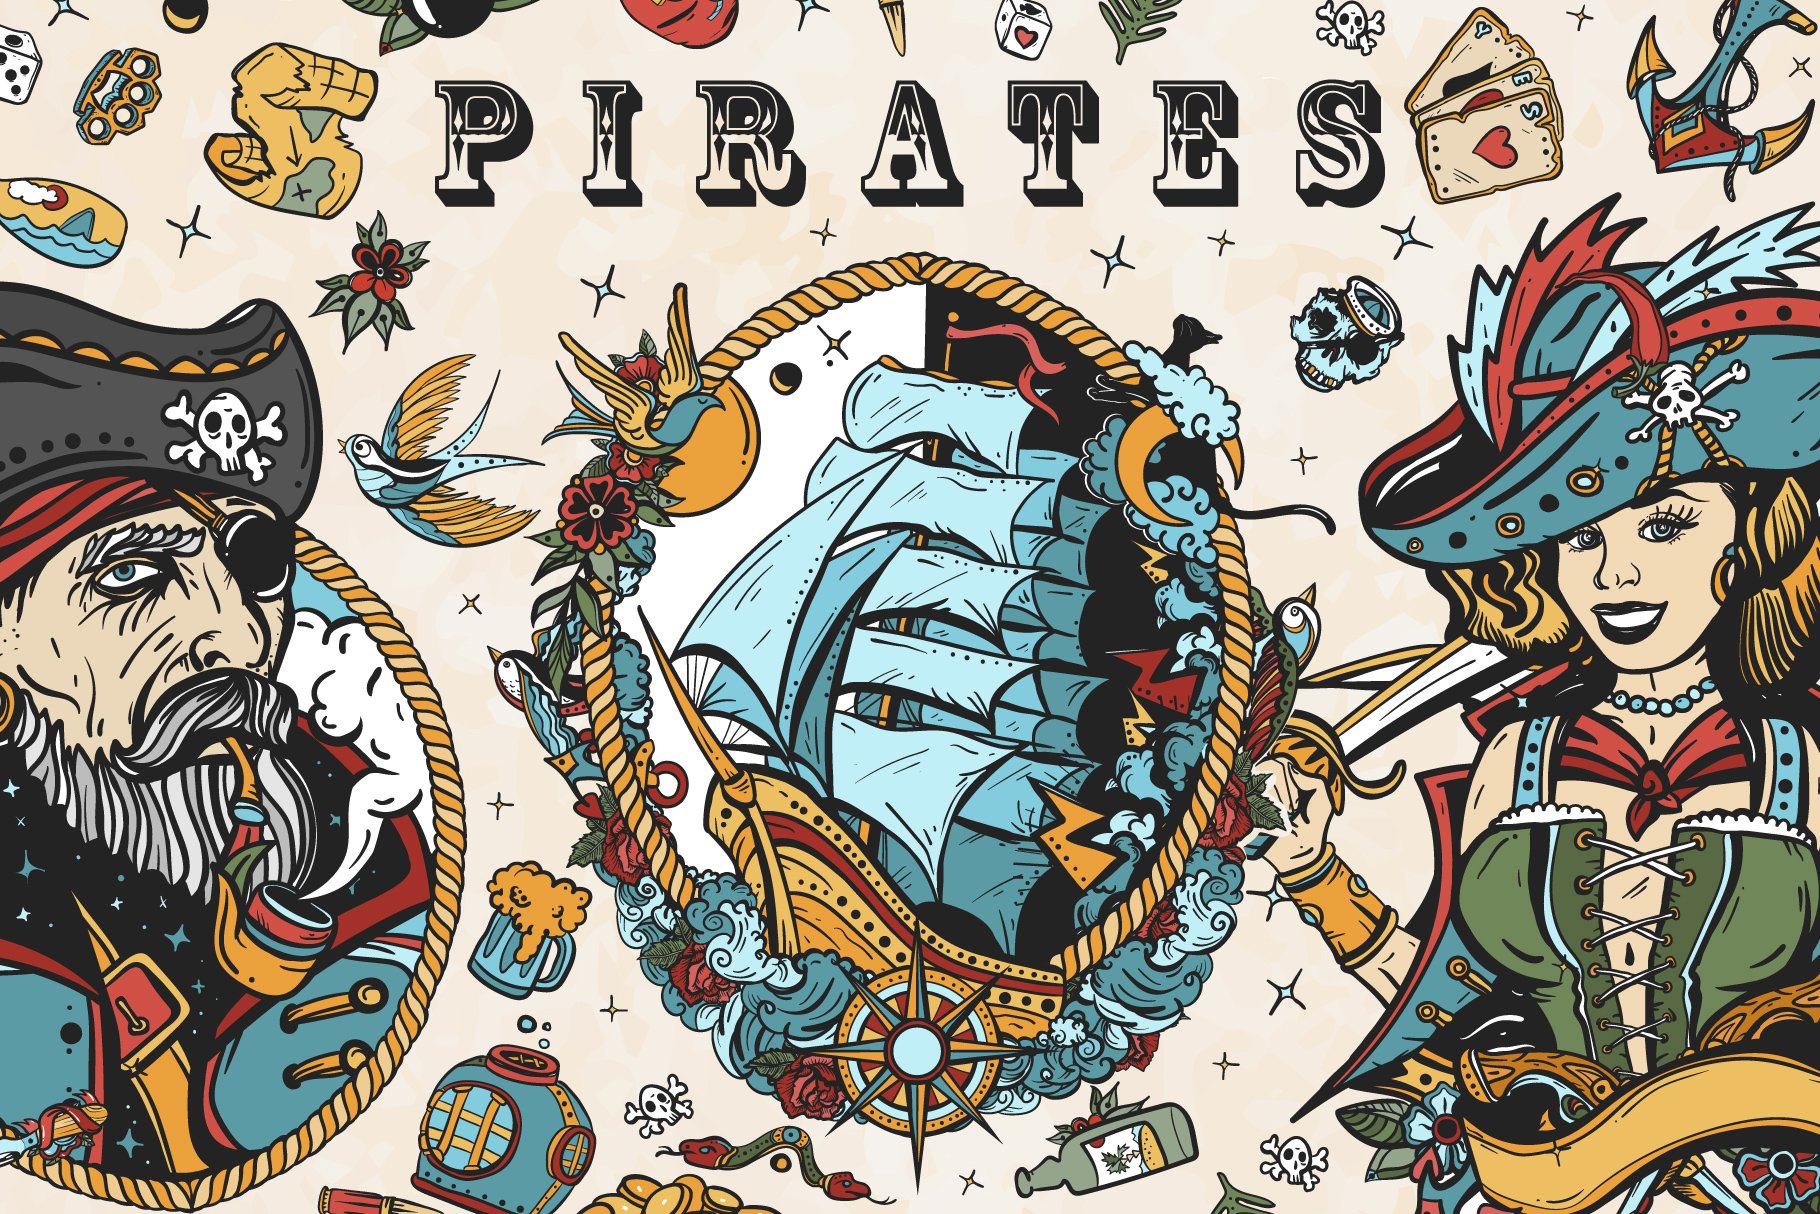 So royal pirates illustration.